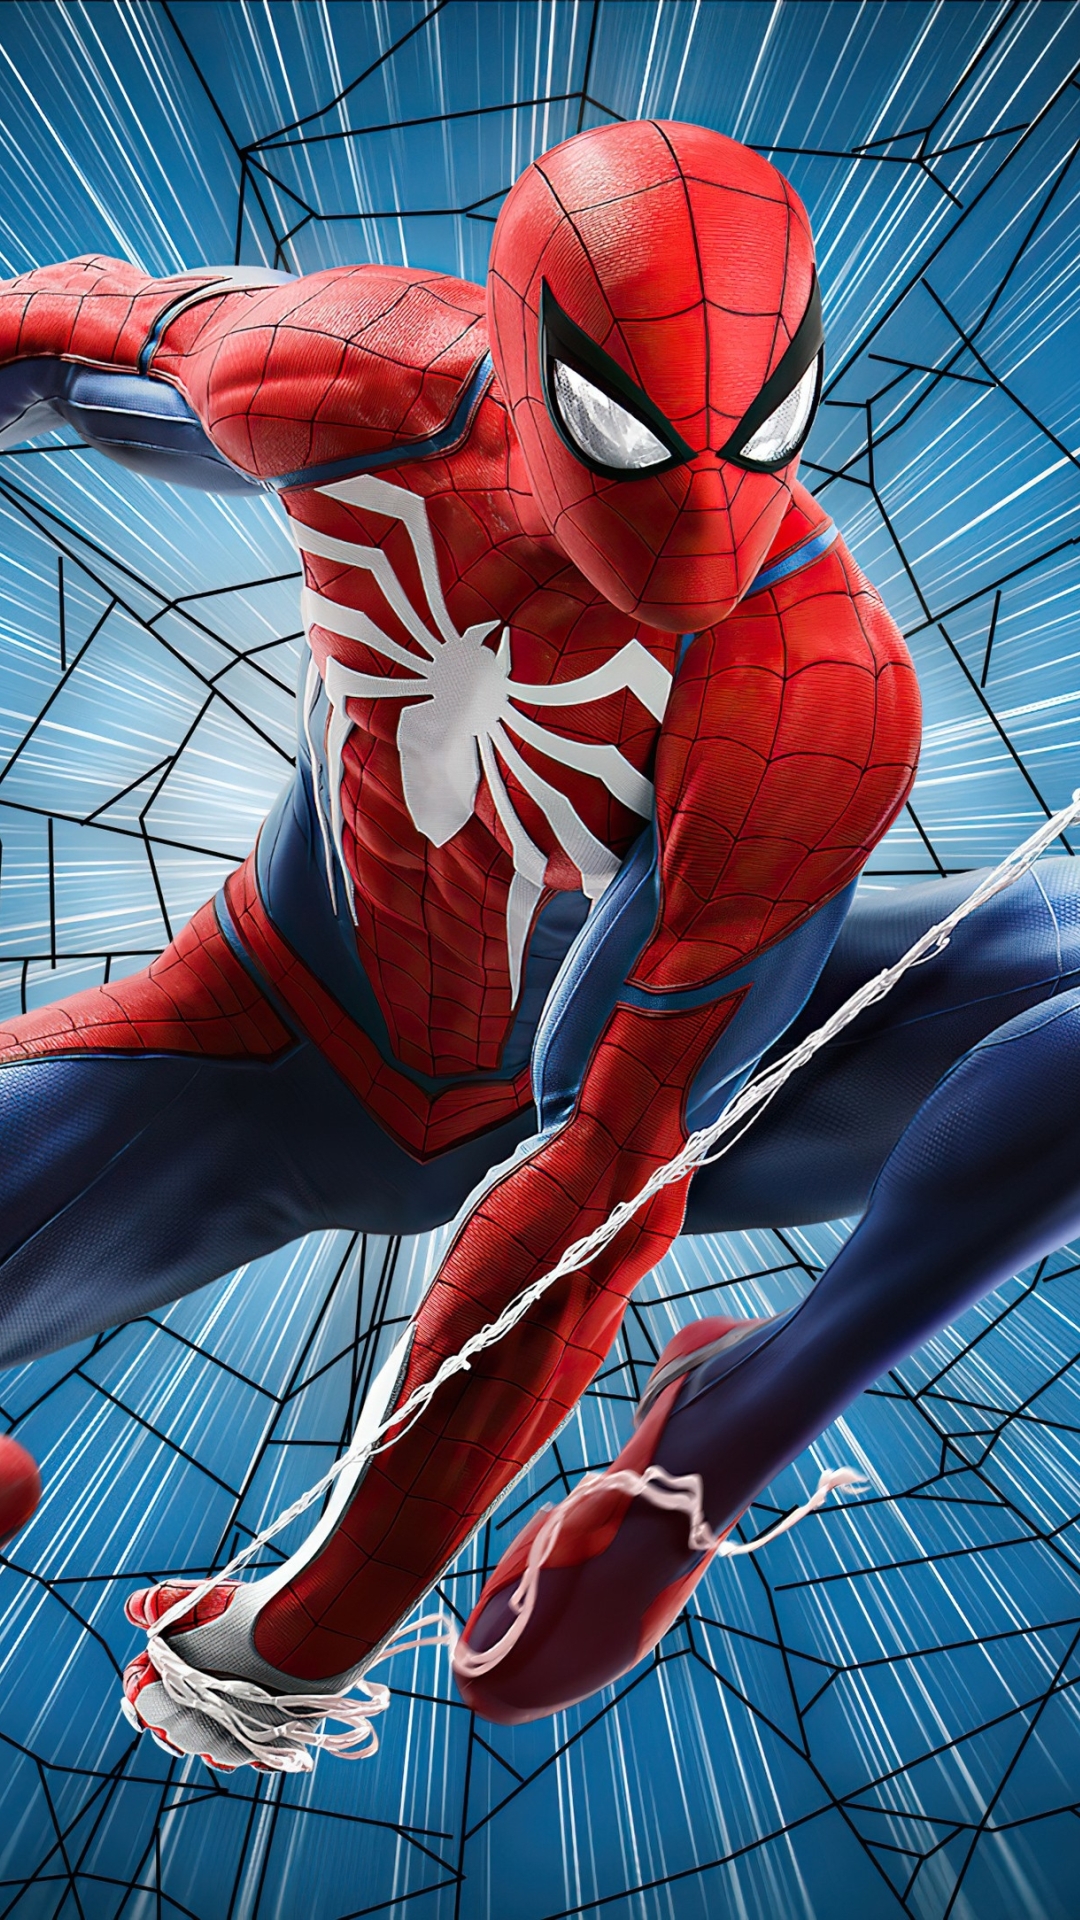 Iron Spider Suit Wallpapers - Top Những Hình Ảnh Đẹp